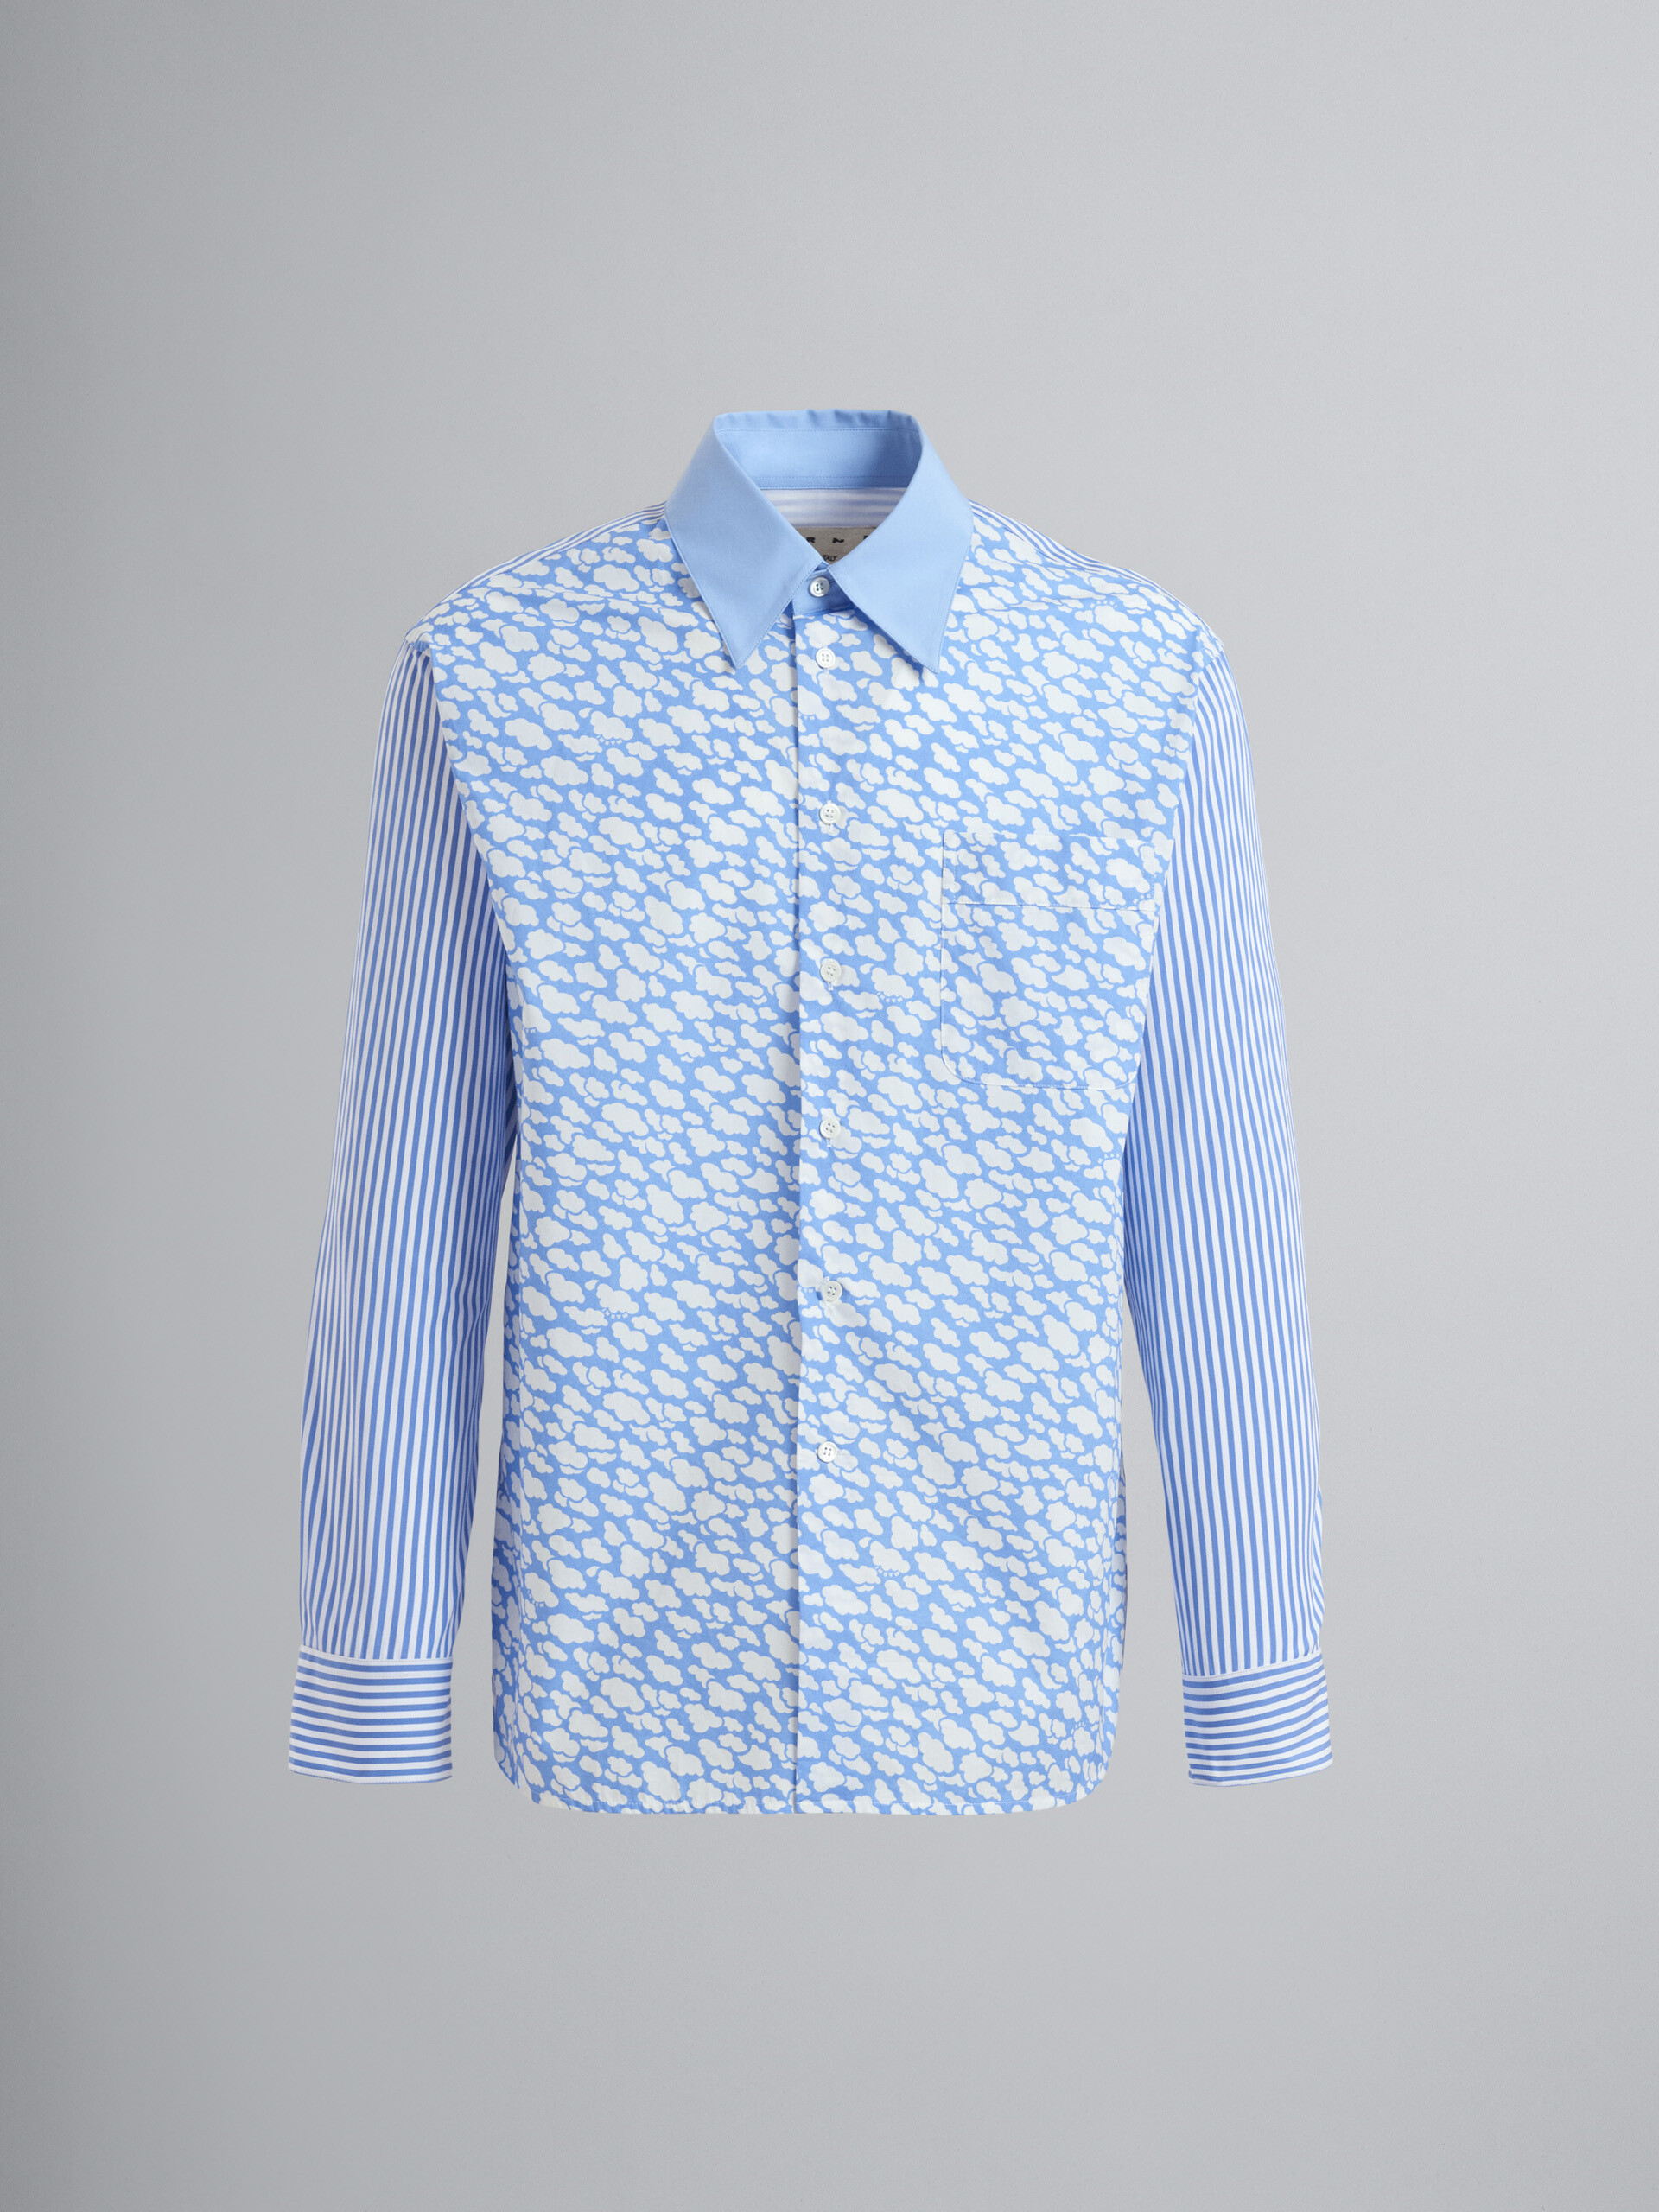 Marni Clouds print cotton poplin shirt - Shirts - Image 1